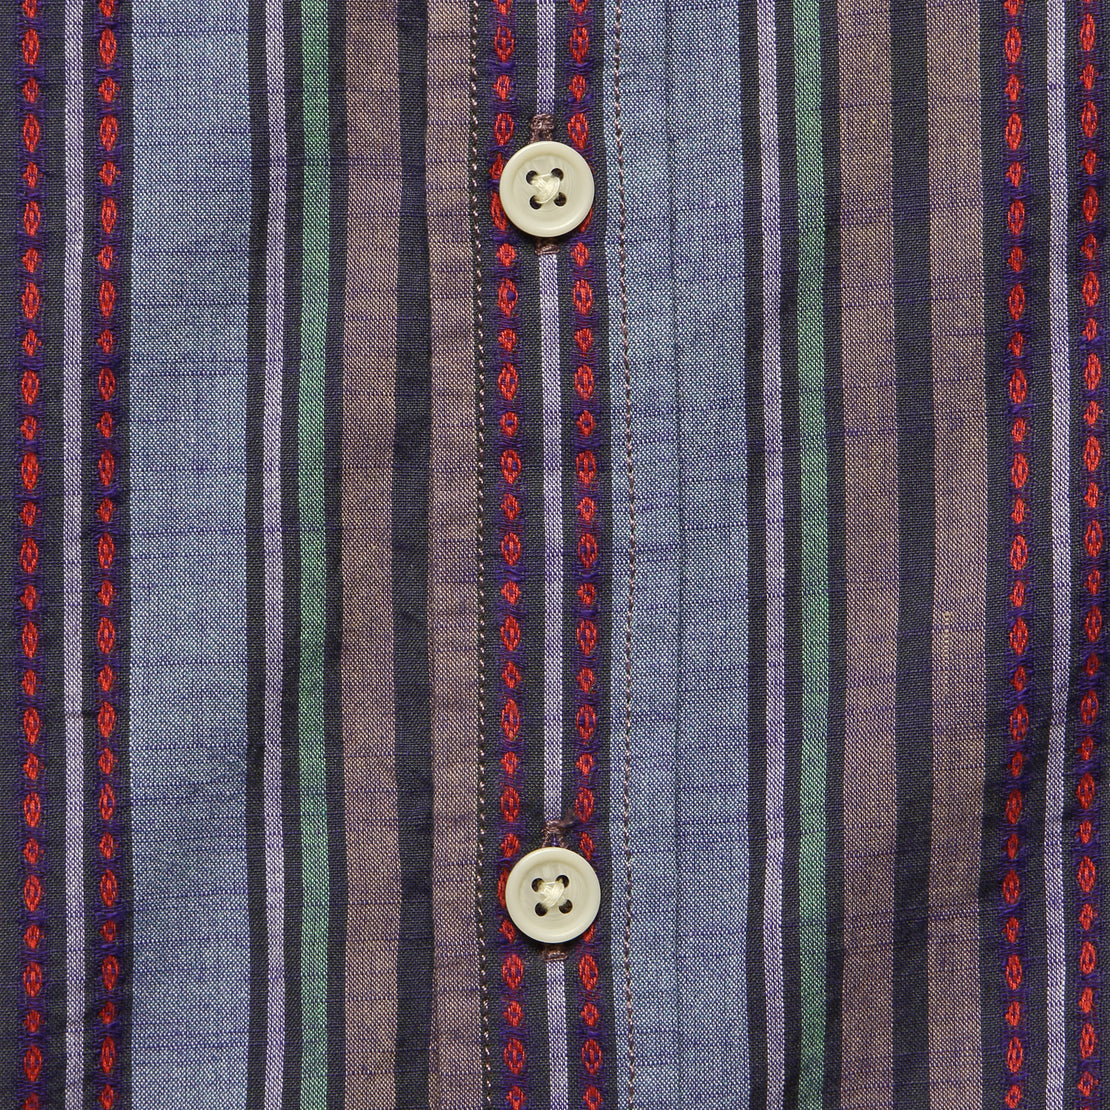 Boardwalk Stripe Shirt - Blue - Corridor - STAG Provisions - Tops - S/S Woven - Stripe